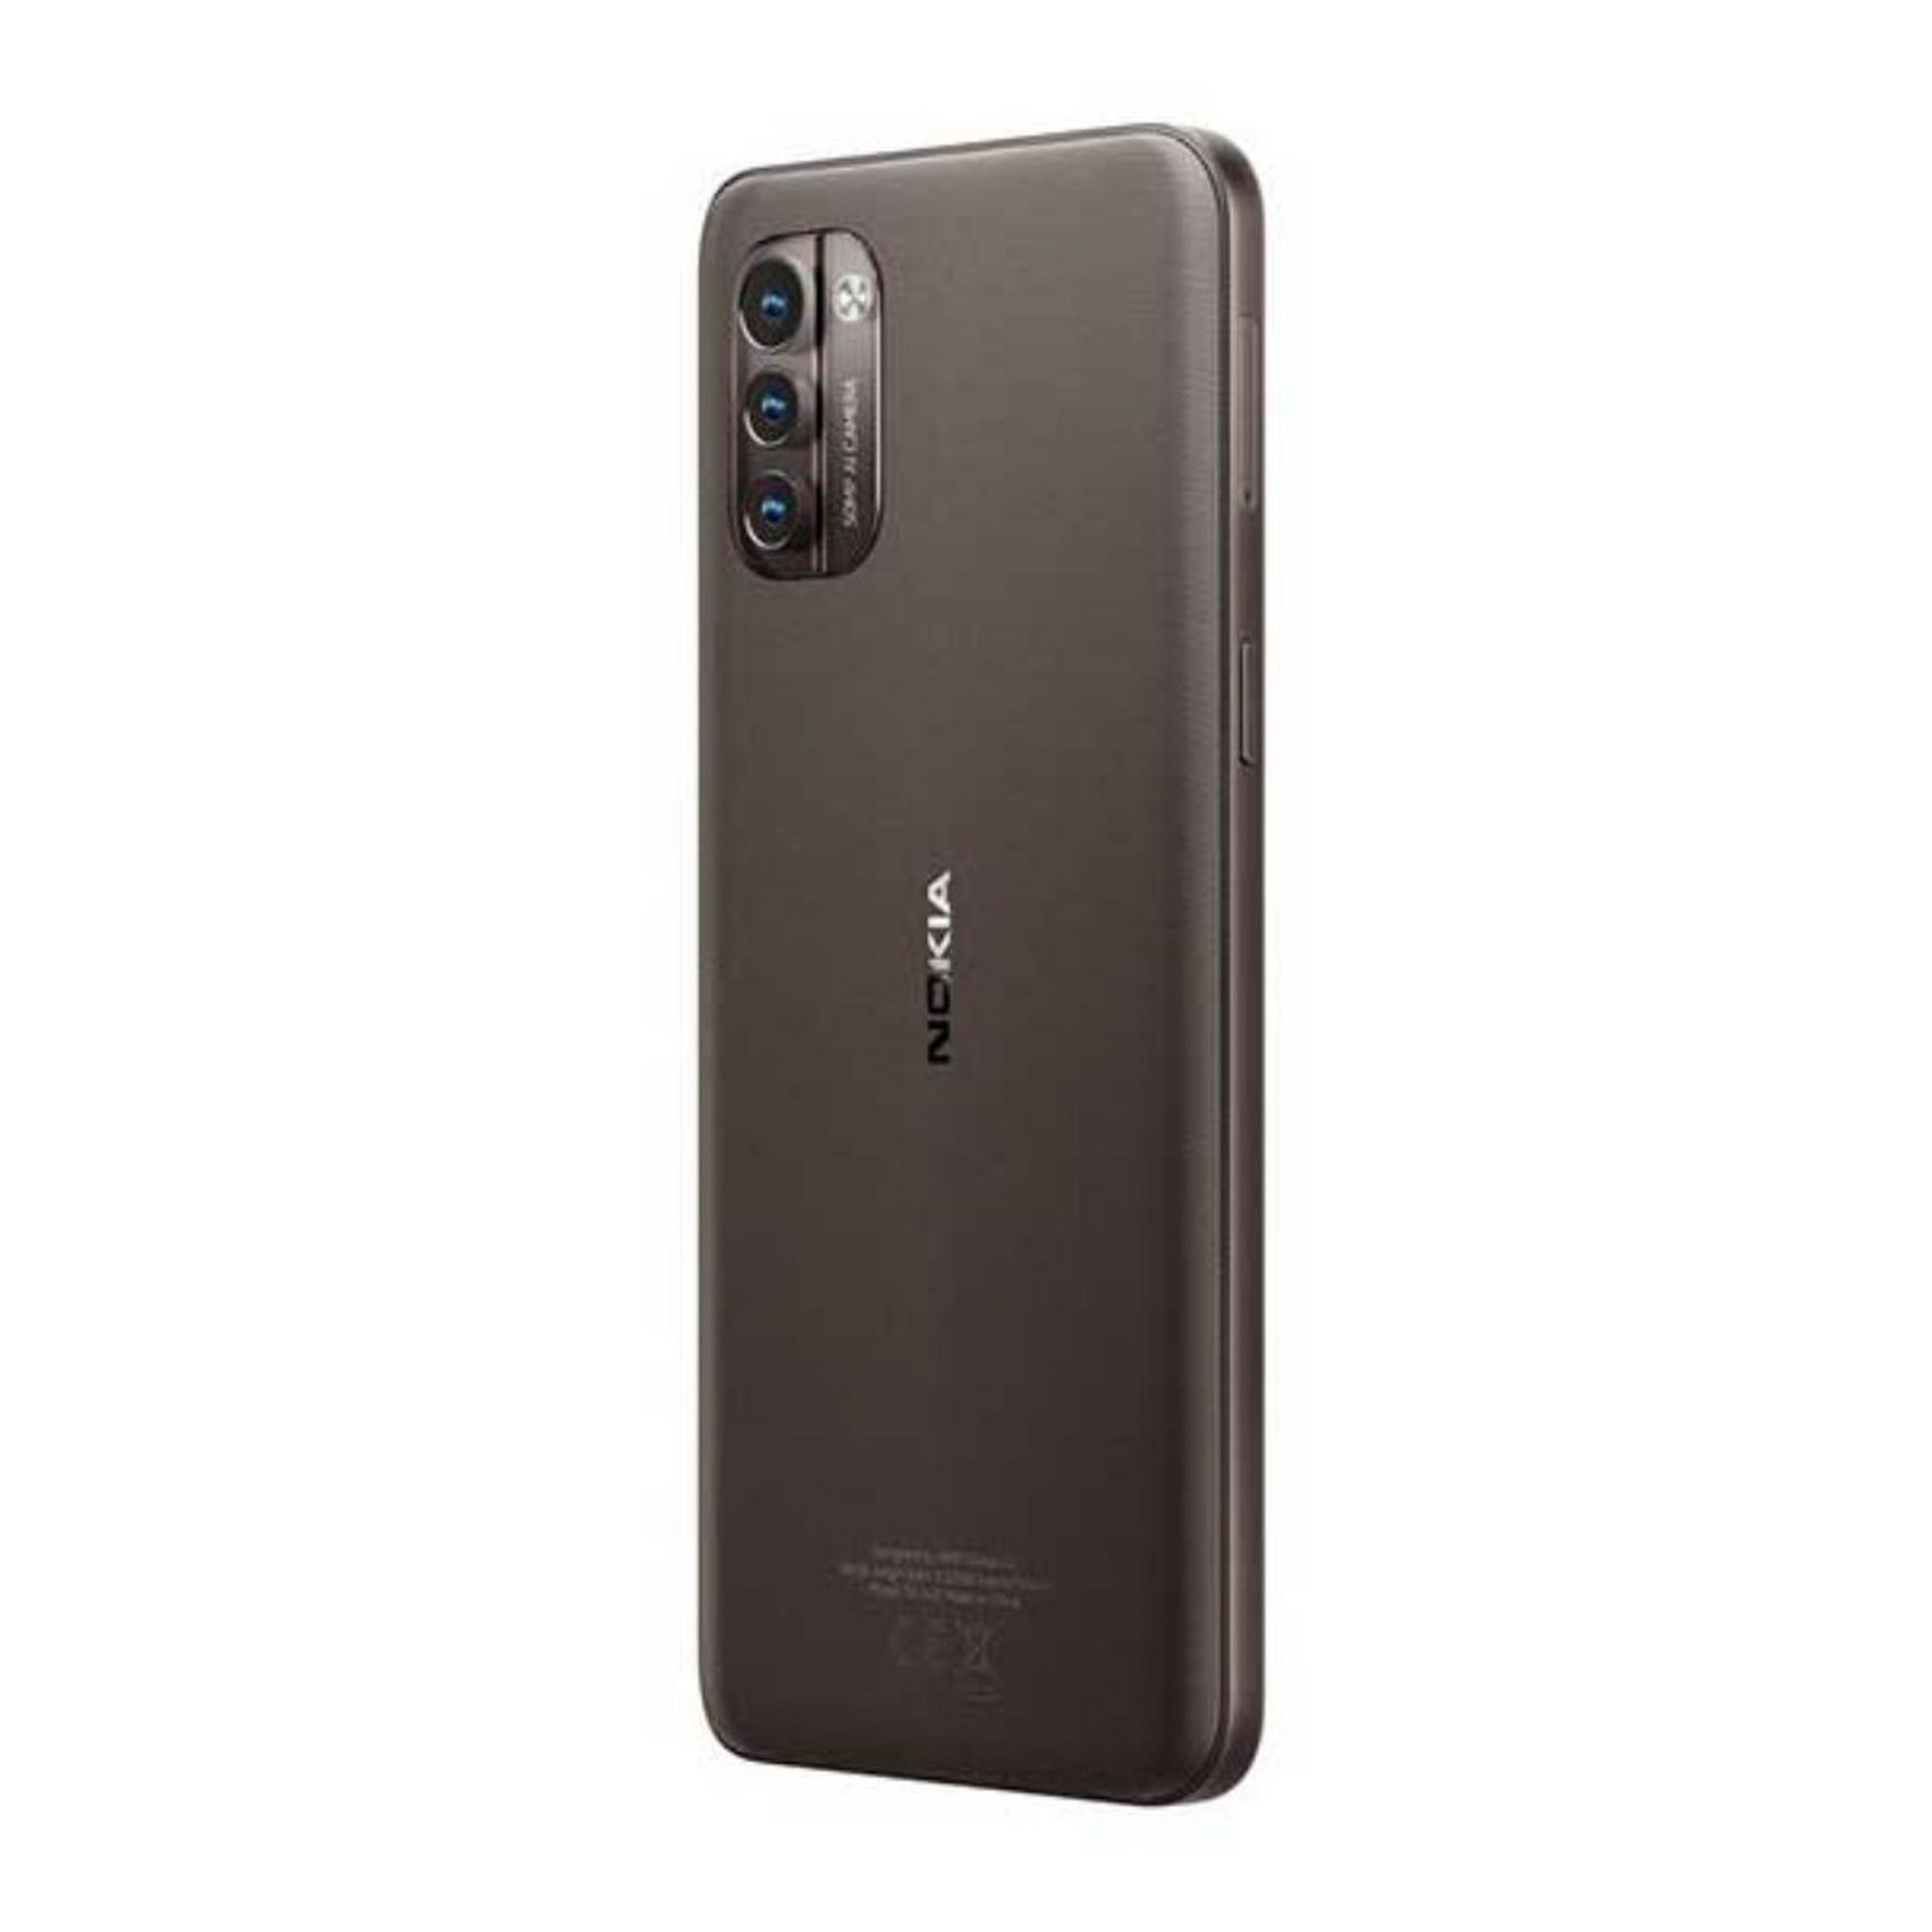 Nokia G21 128GB Phone - Grey